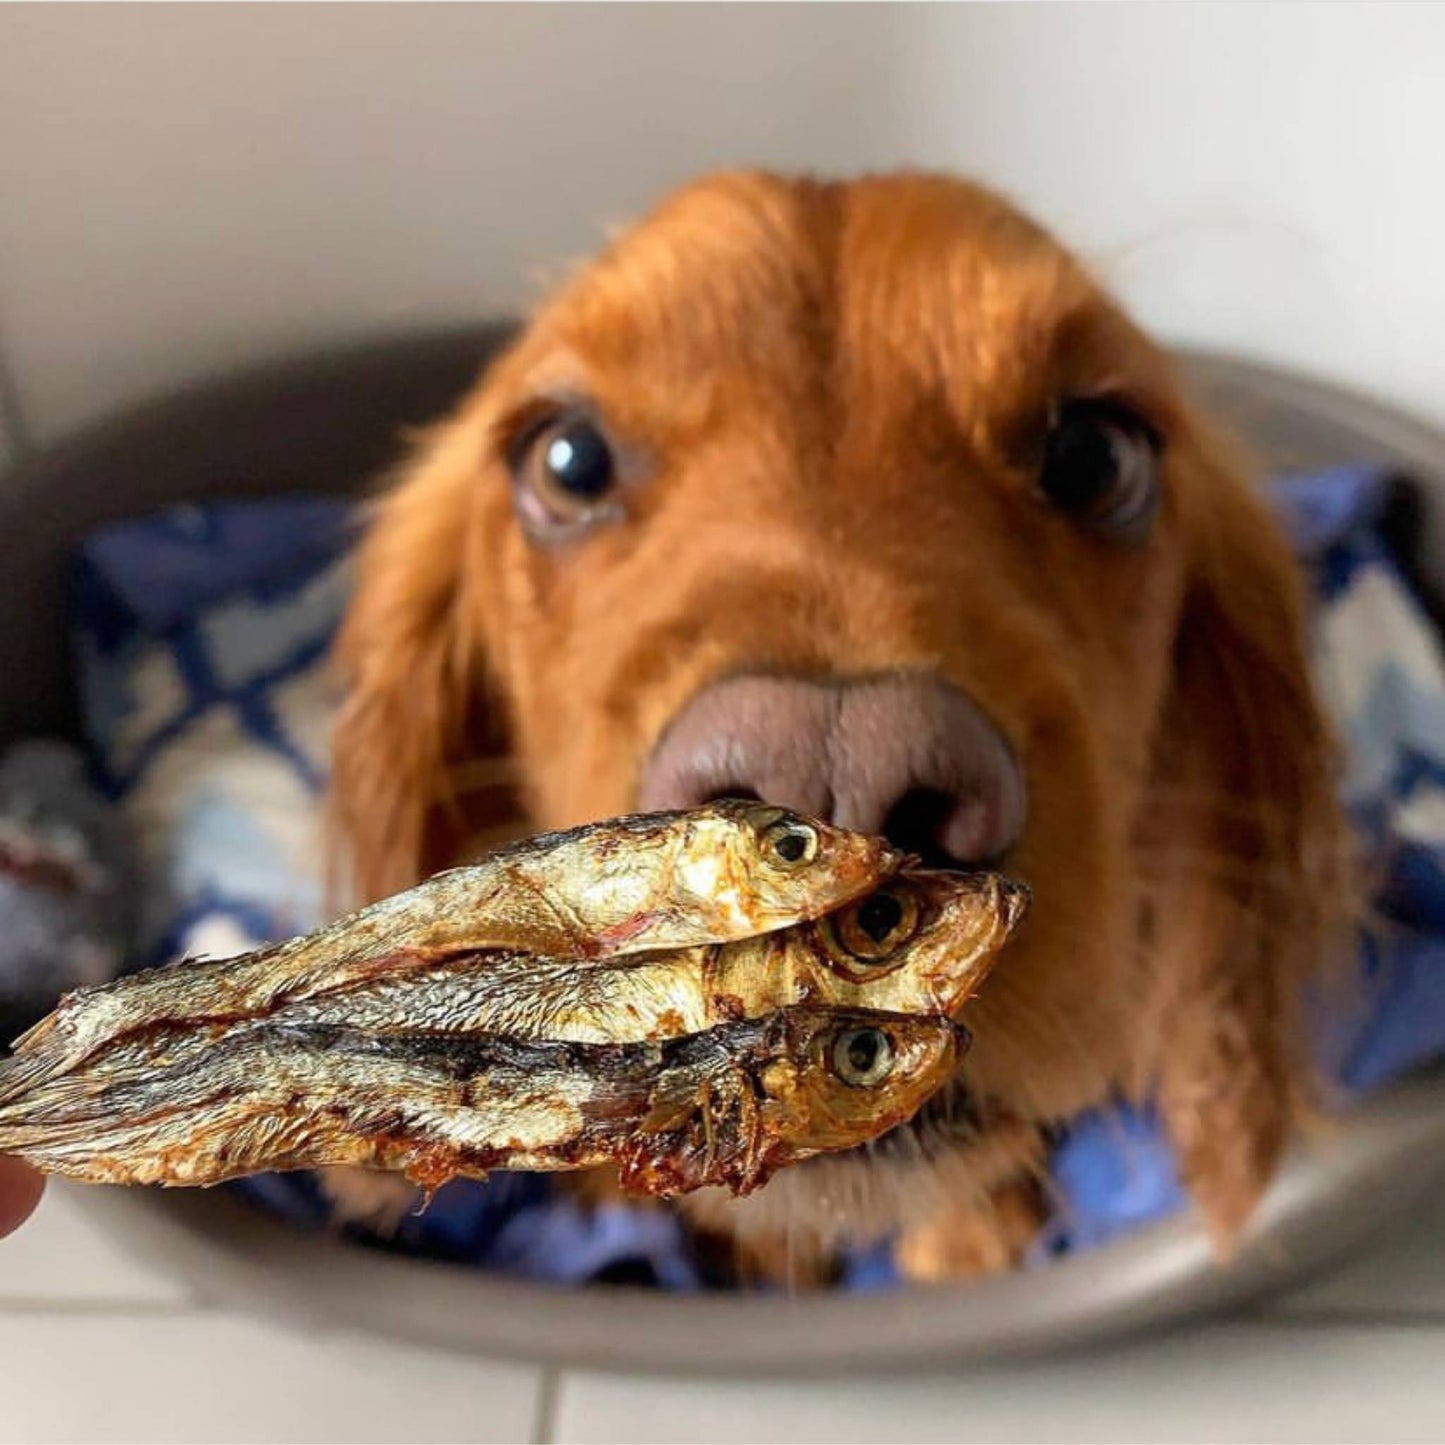 Spaniel eating a dried sprat dog treat